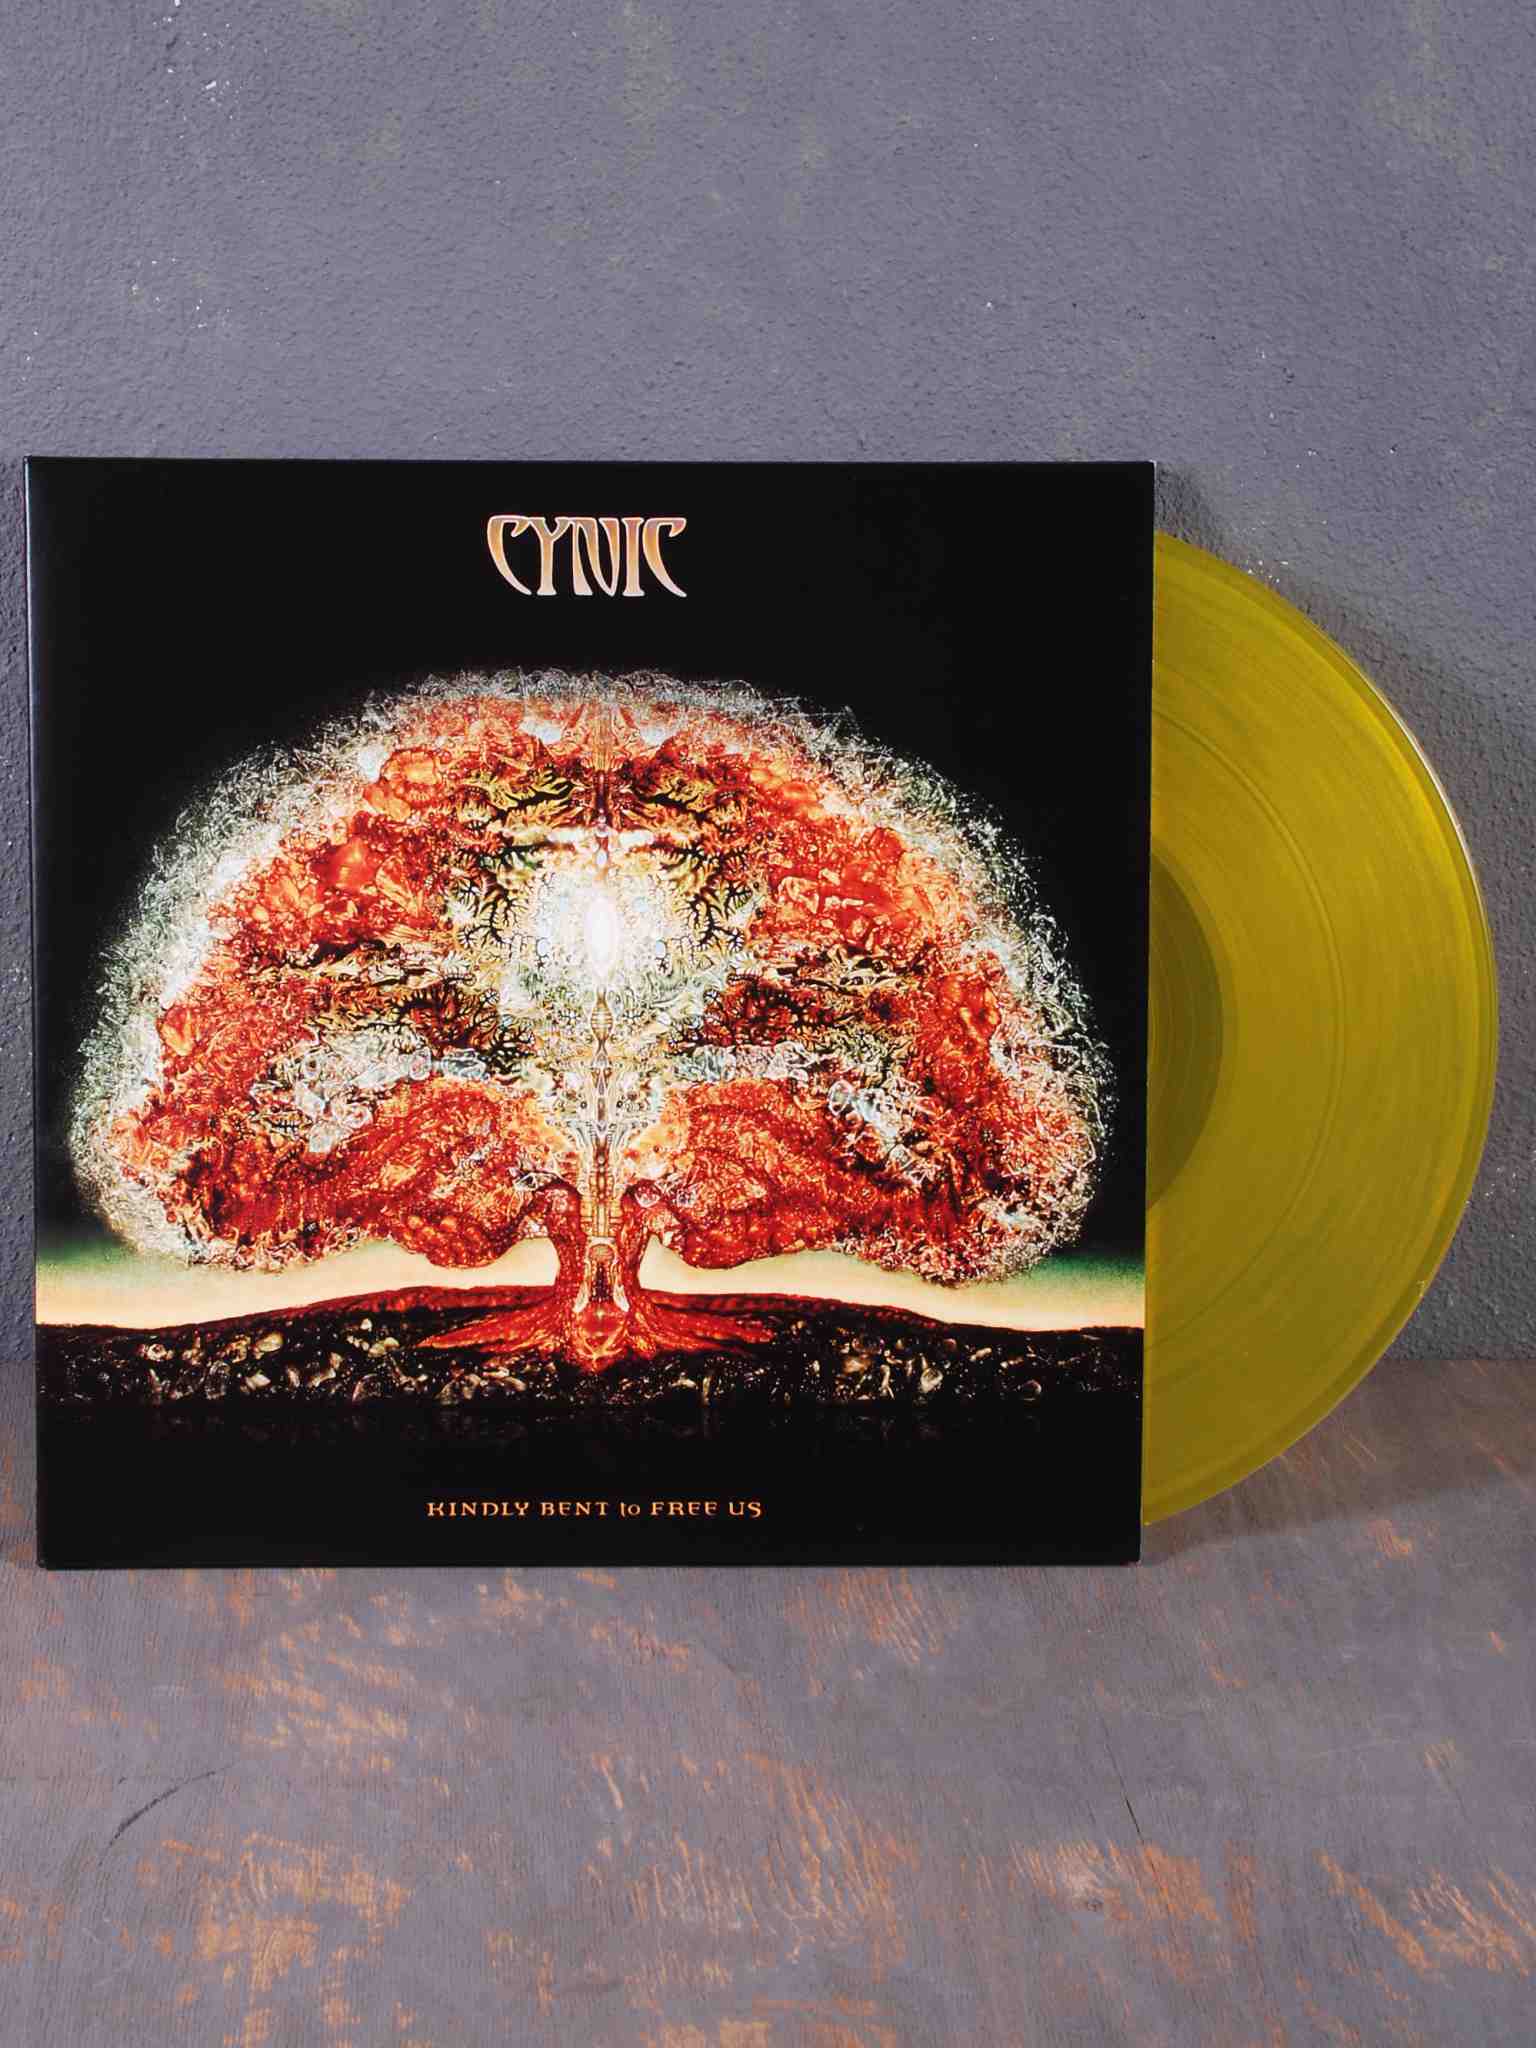 CYNIC 'KINDLY BENT TO FREE US' 2LP (Yellow Sun Vinyl)